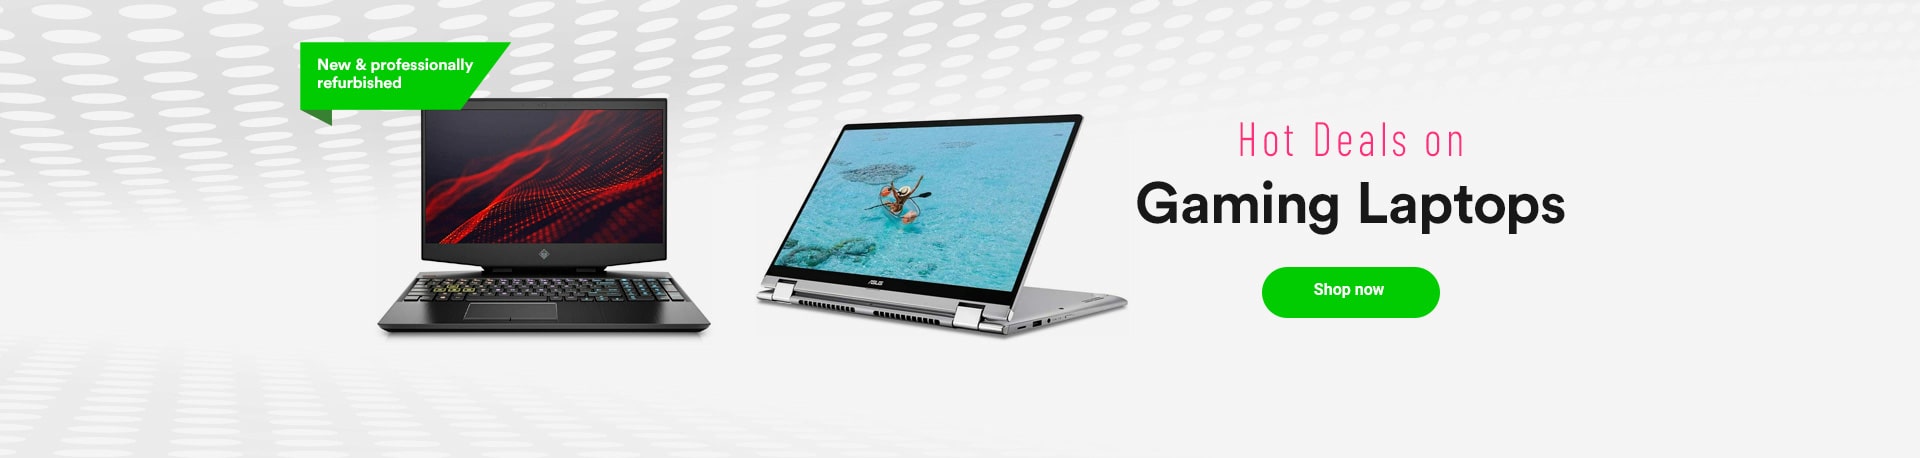 Homepage - Gaming Laptops